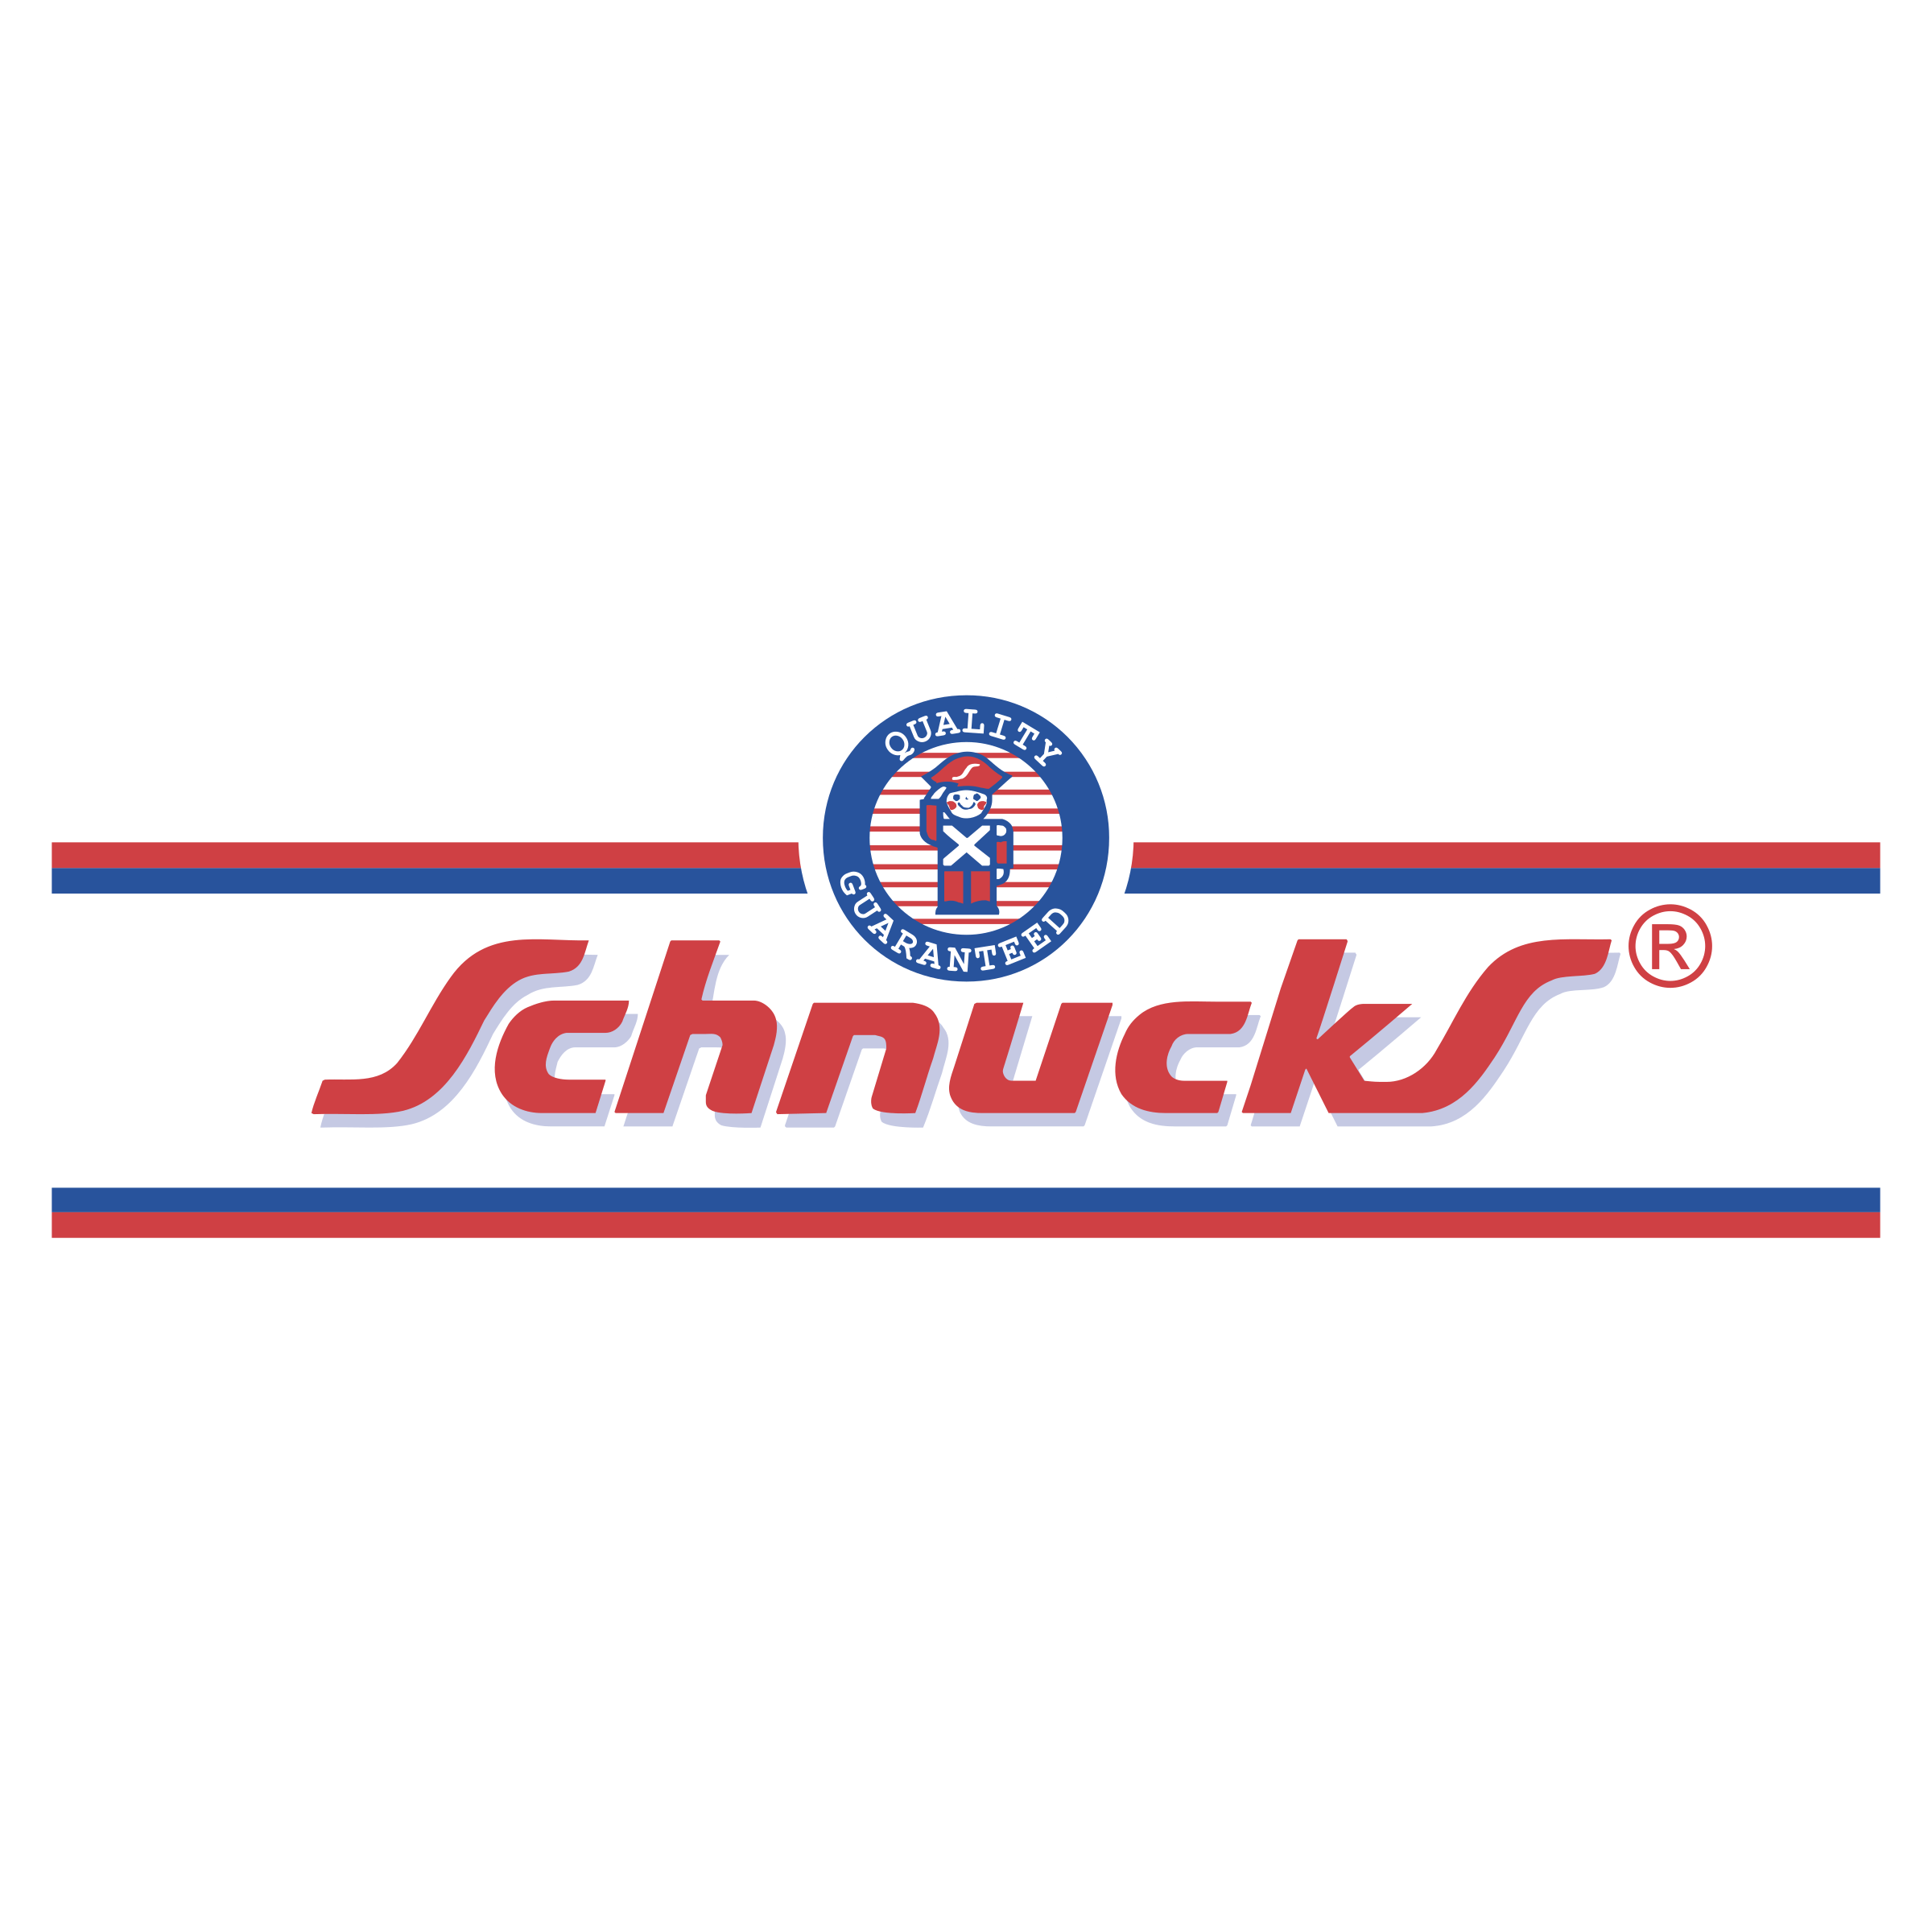 Schnucks Logo - Schnucks Logo PNG Transparent & SVG Vector - Freebie Supply